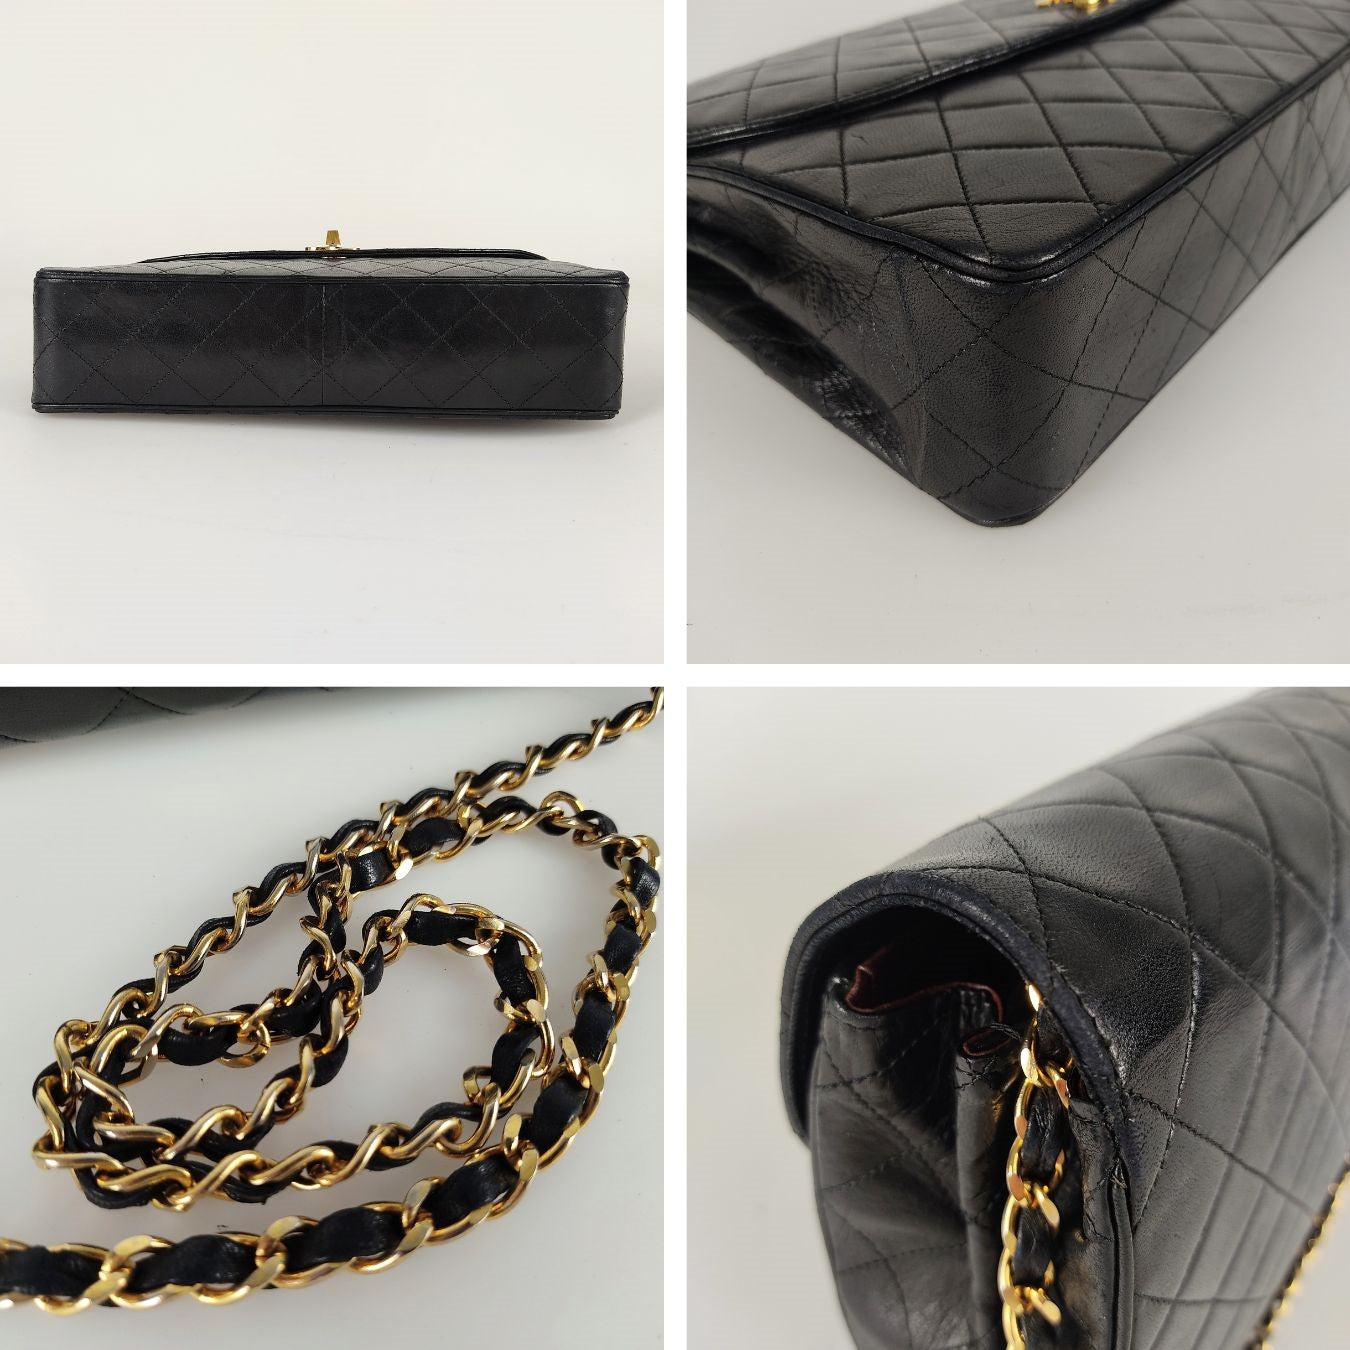 Chanel Classic Timeless In Black Matelassé Leather Shoulder Bag